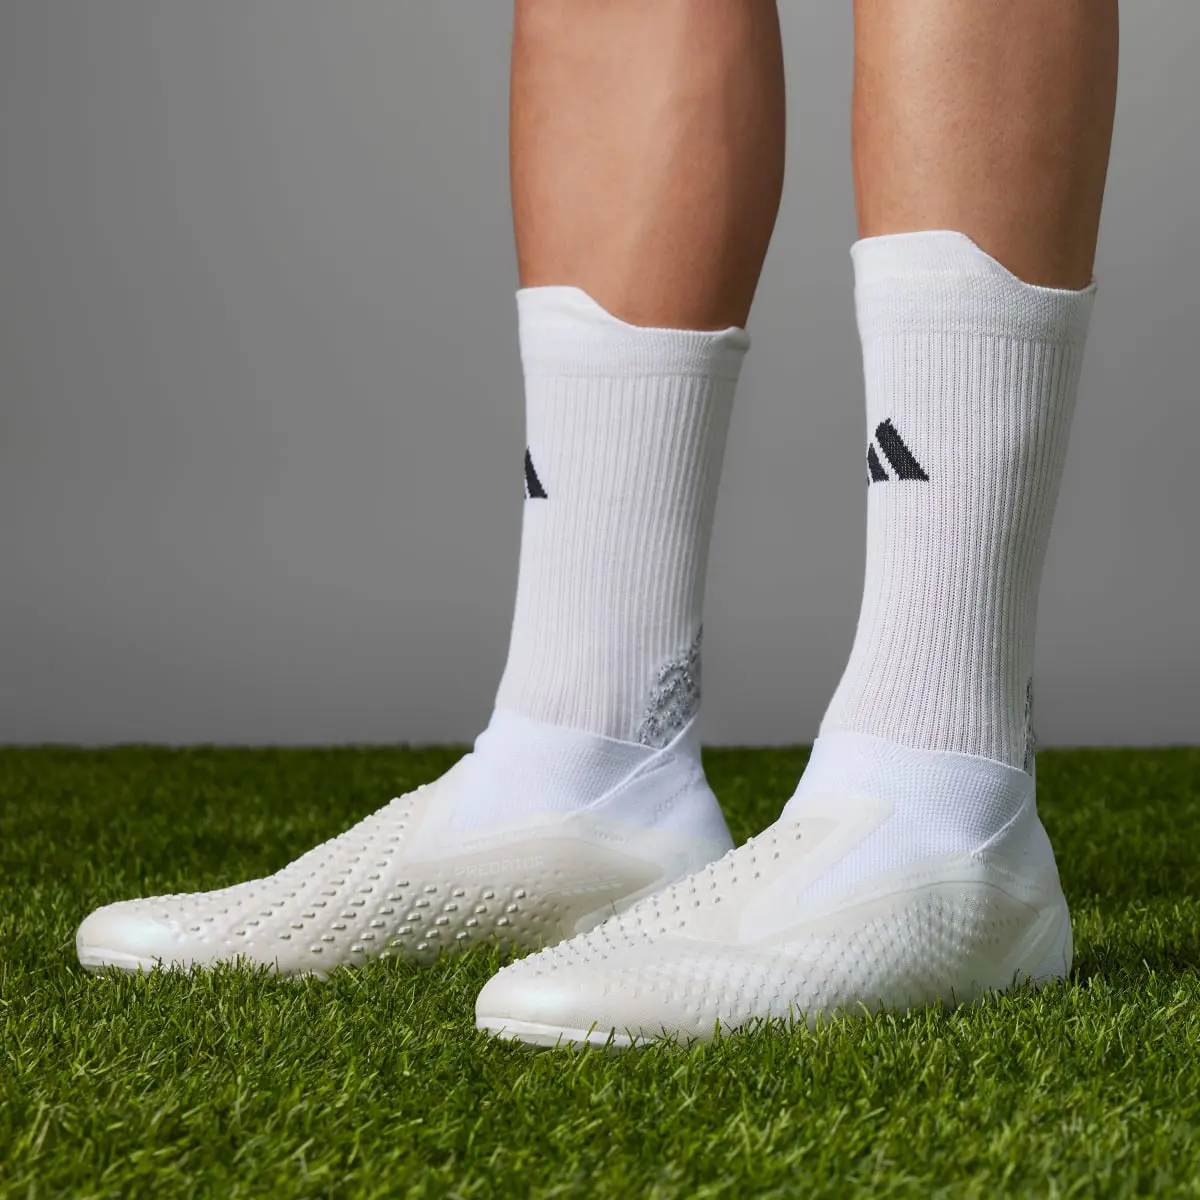 Adidas Botas de Futebol Predator Accuracy+ – Piso firme. 2